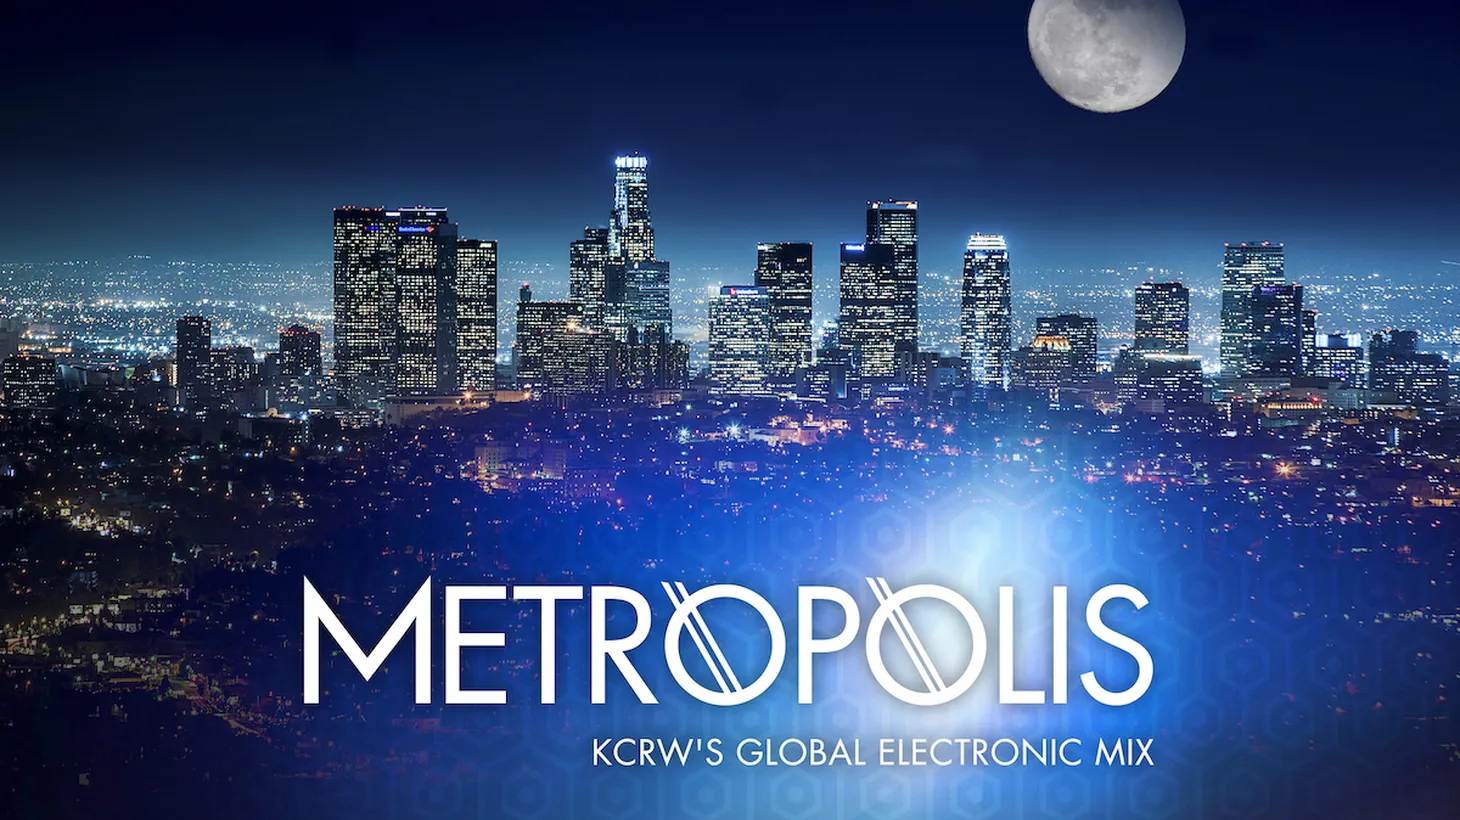 Metropolis playlist, October 17, 2020.